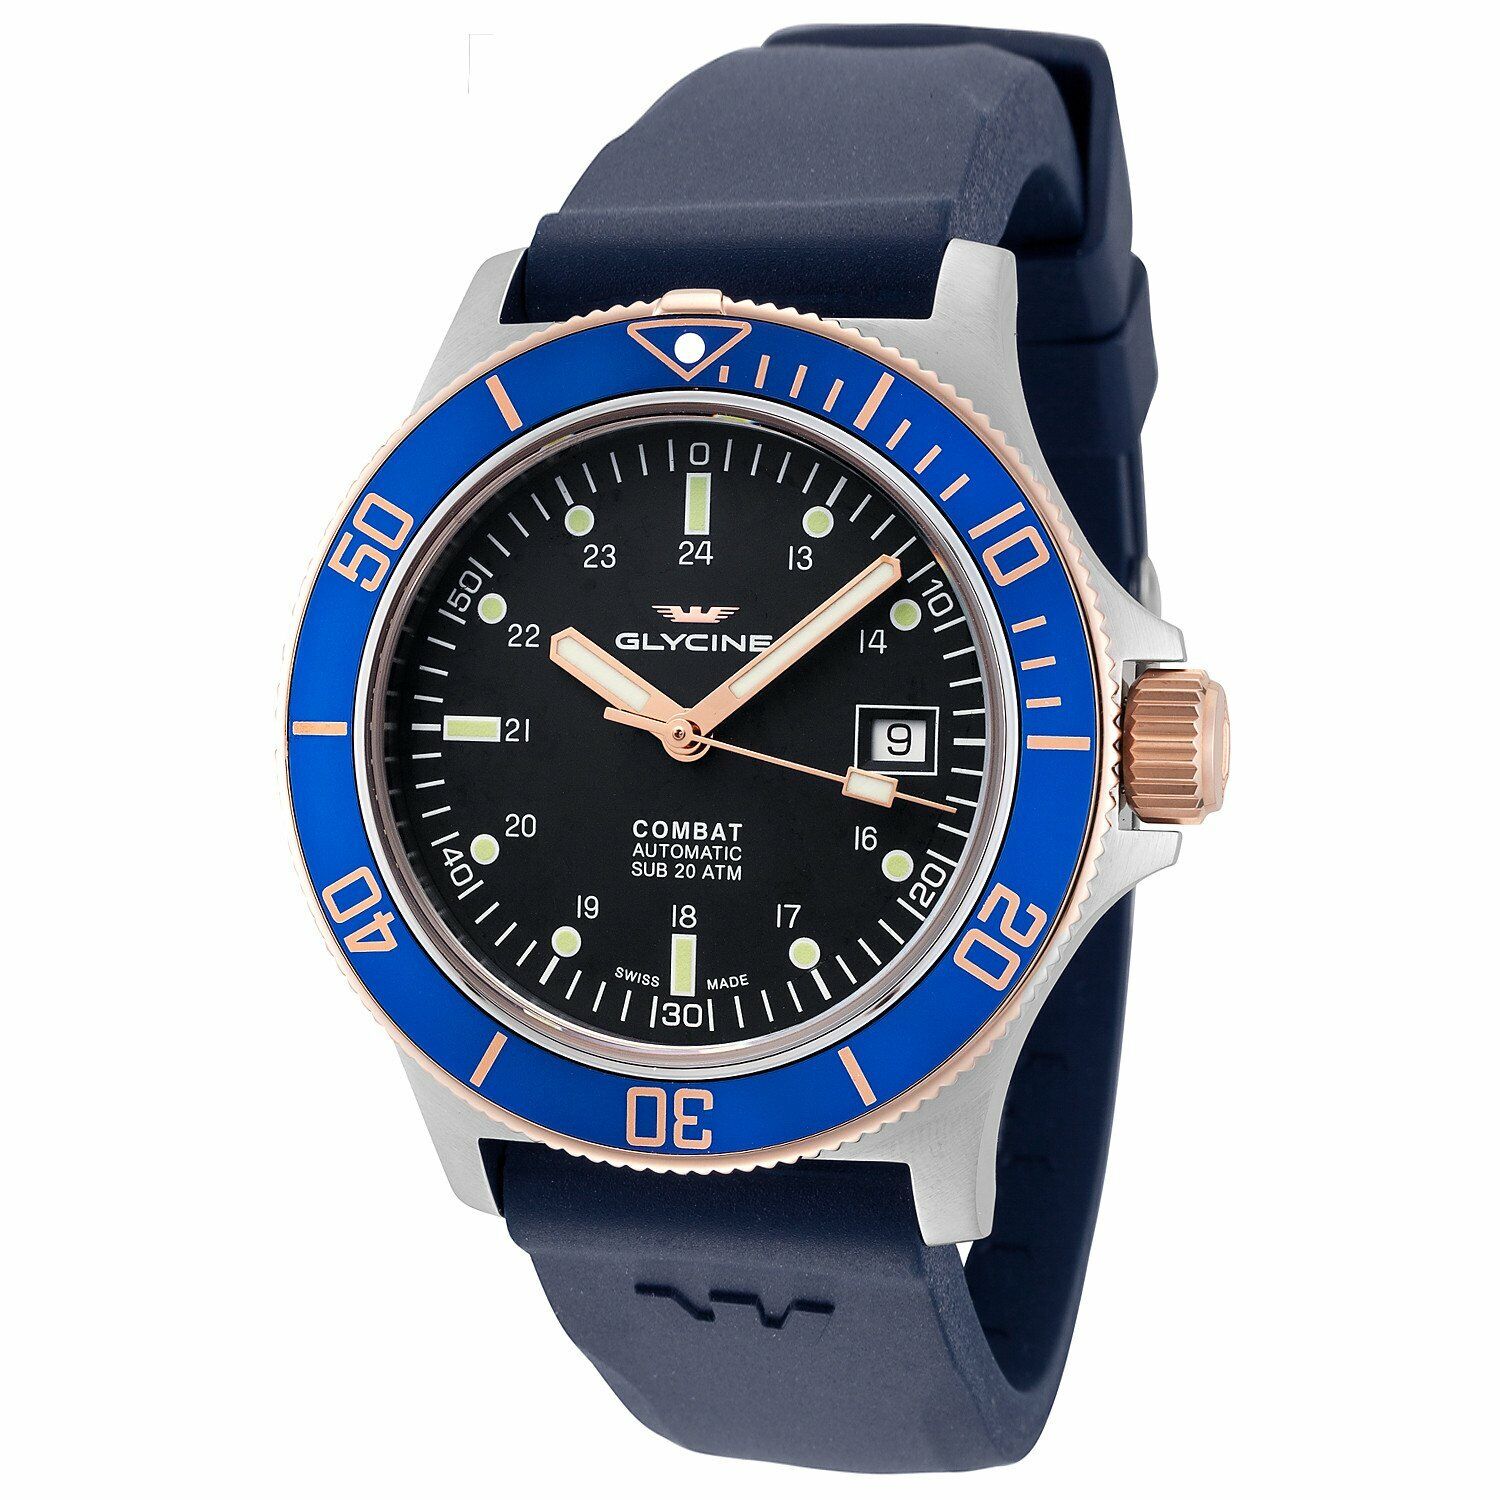 Glycine Men's 3908.383.B6.D8D Combat Sub Automatic 42mm GL0089 Wrist Watch